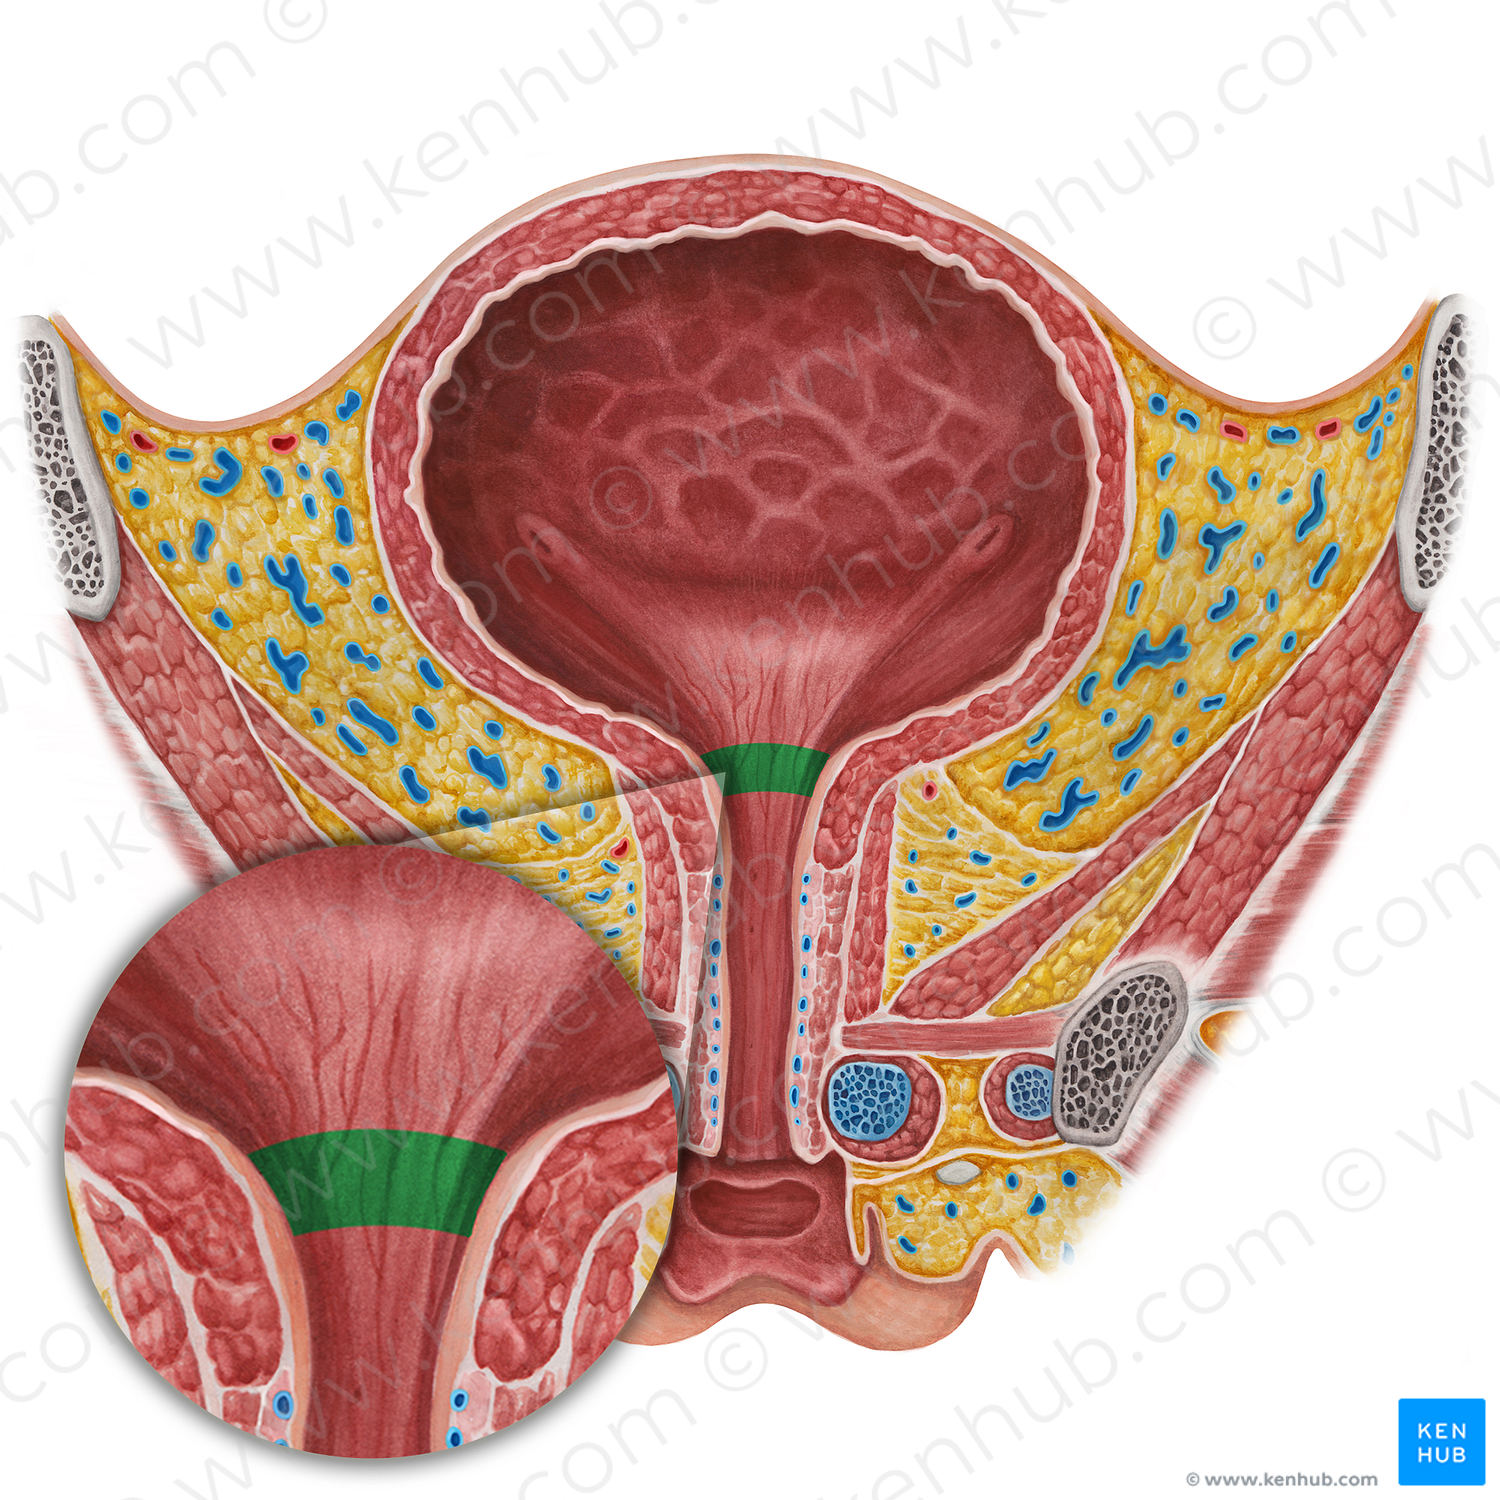 Neck of urinary bladder (#2584)